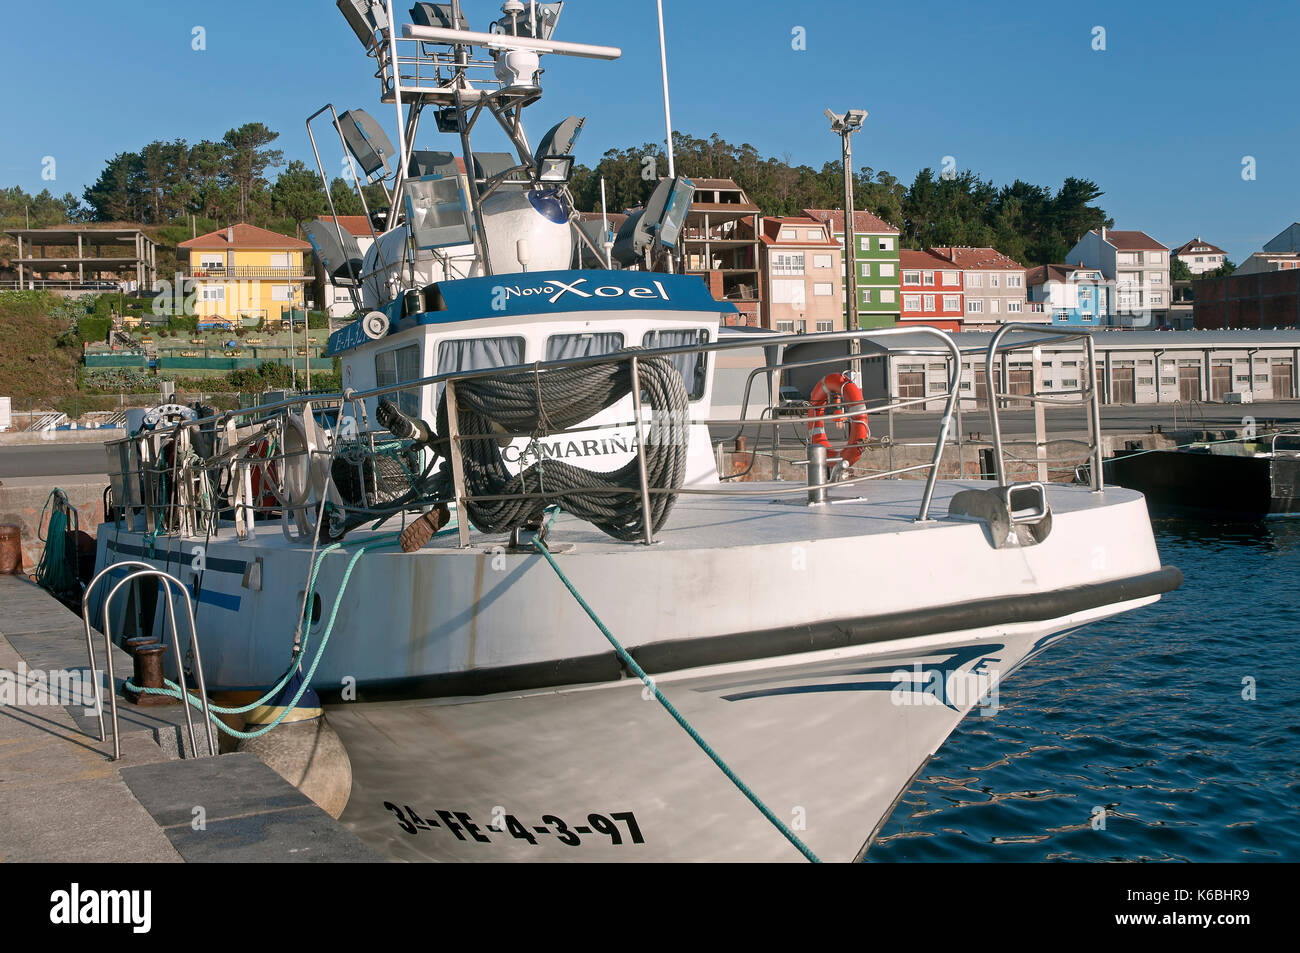 Fishing port, Camarinas, La Coruna province, Region of Galicia, Spain, Europe Stock Photo